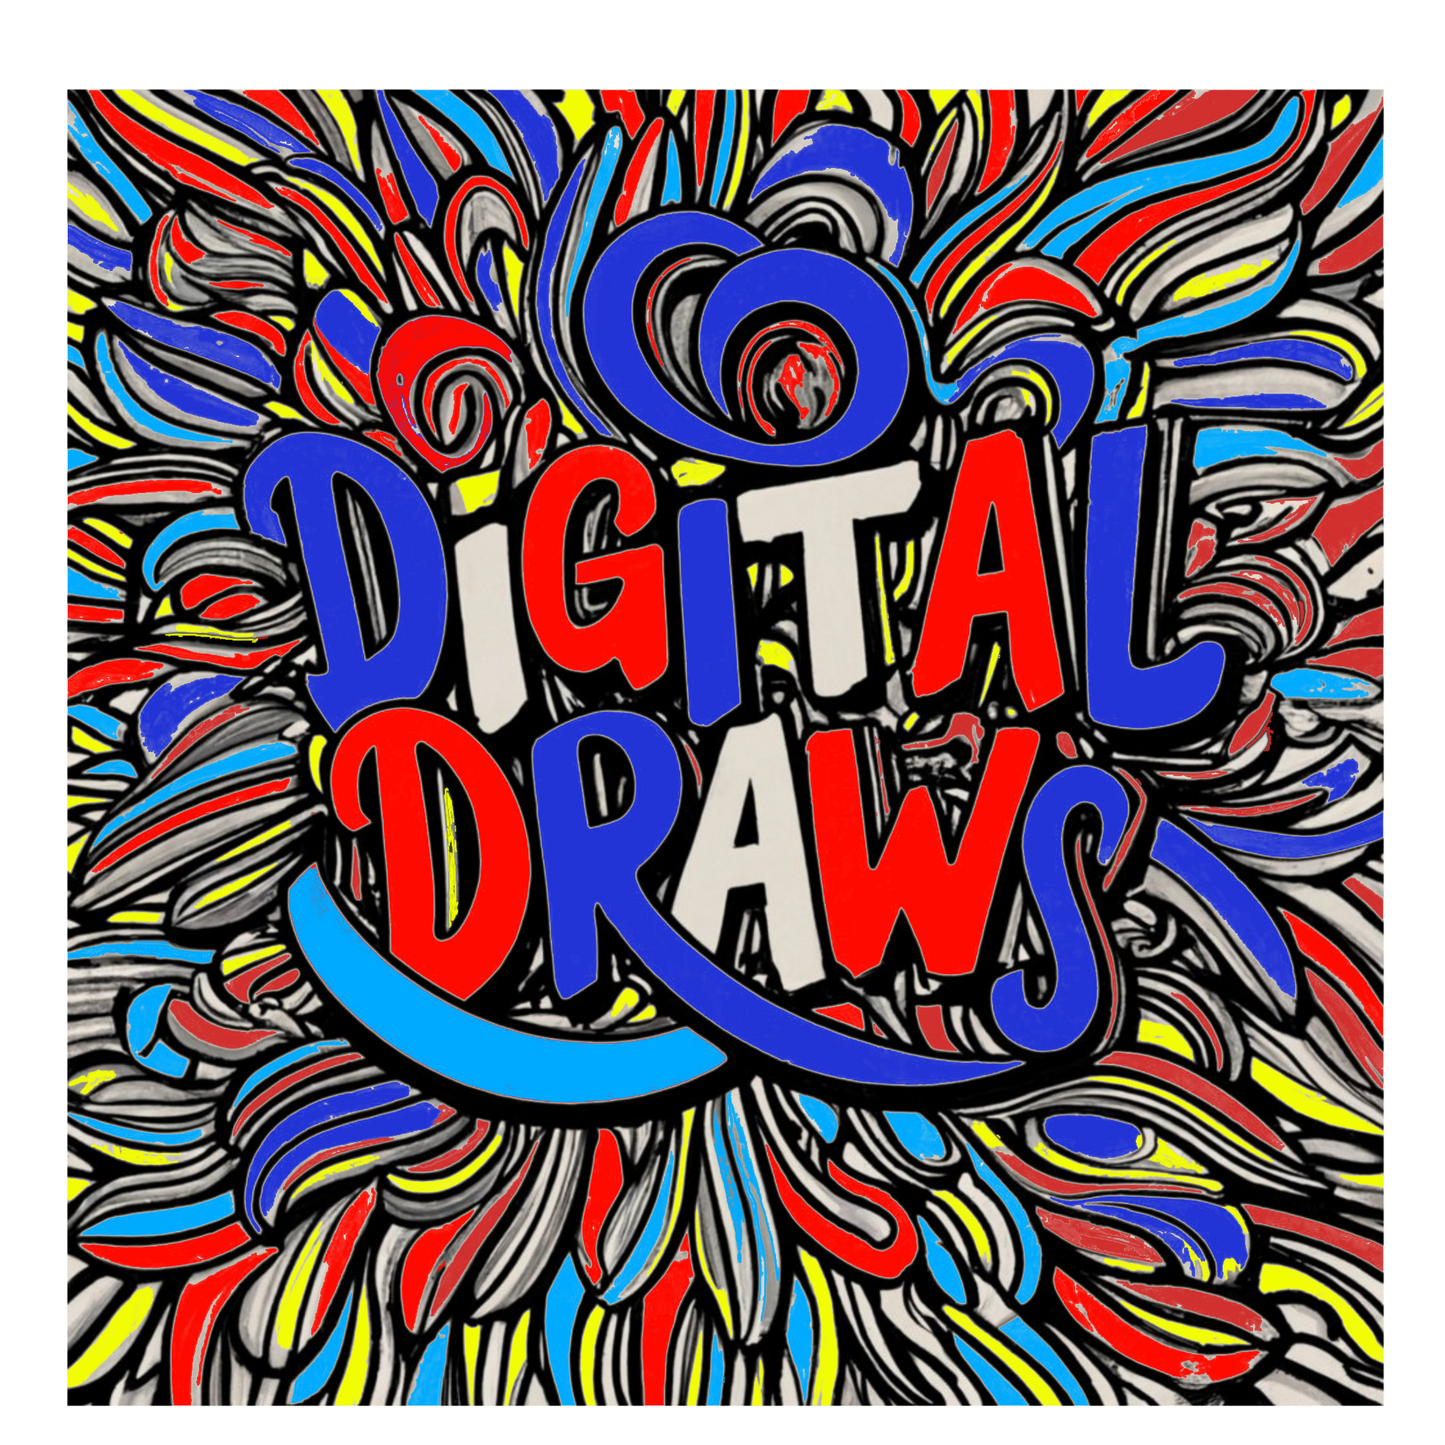 Digital Draws Vol. 1 (33 Pictures)